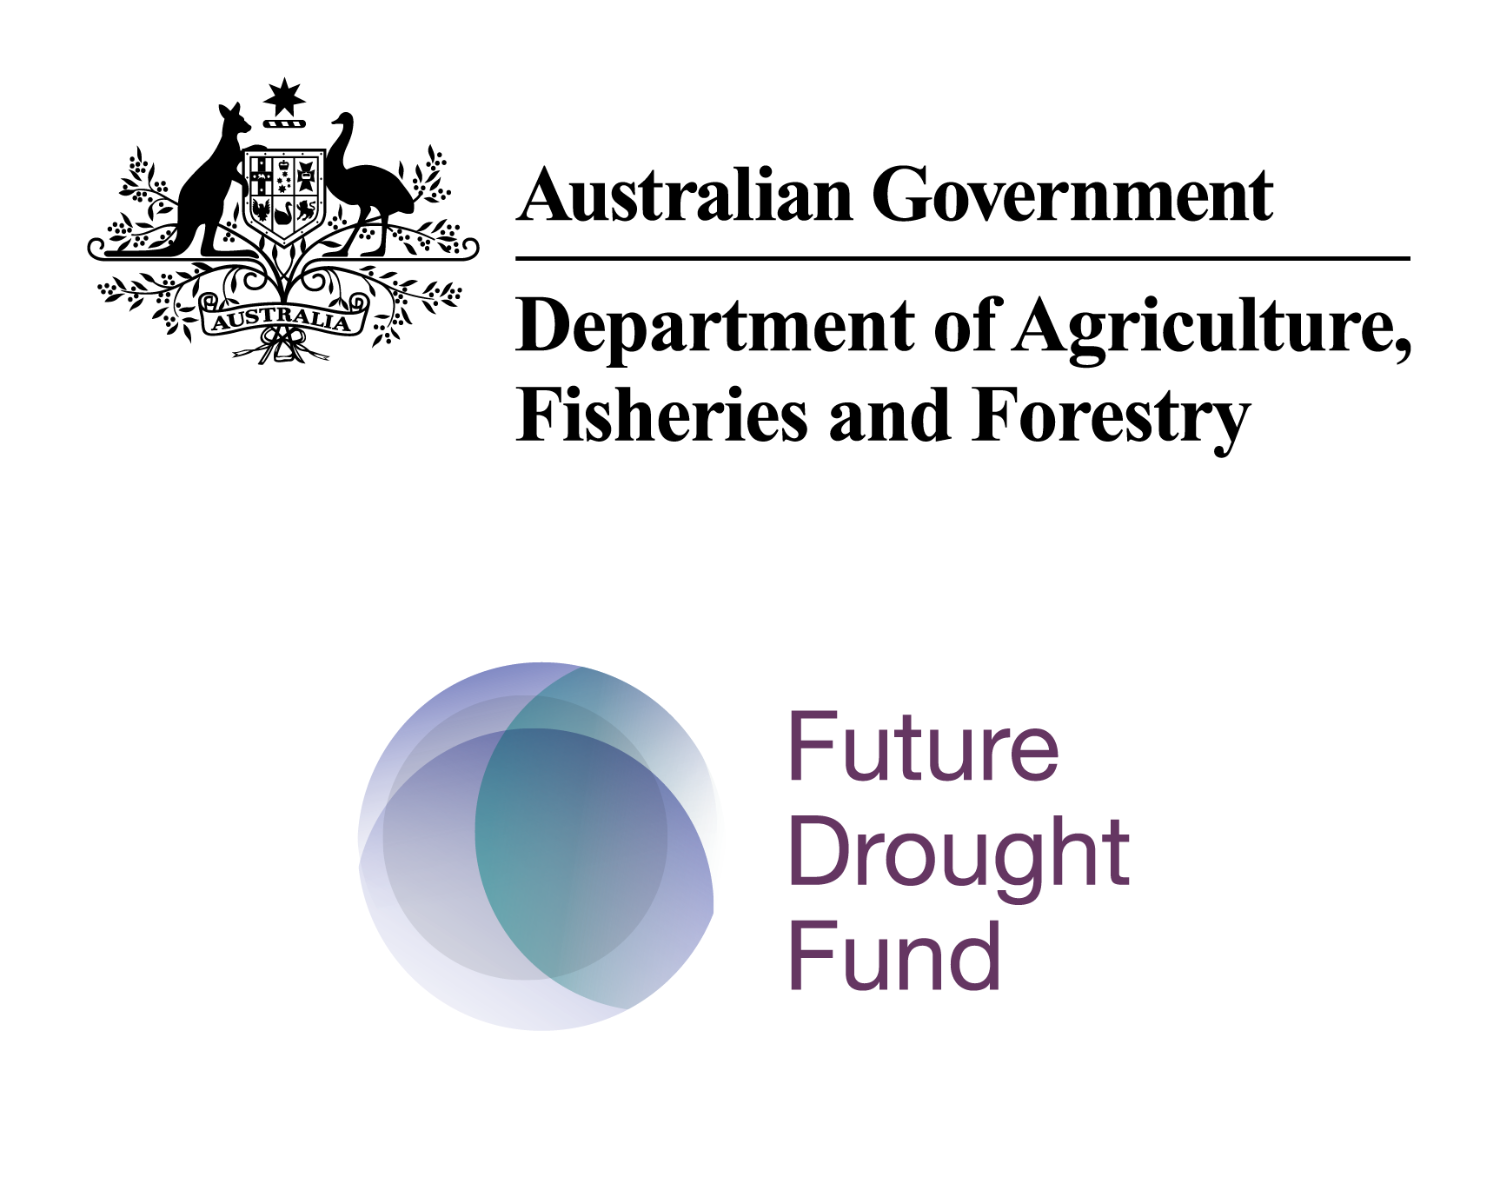 Australian Government's Future Drought Fund